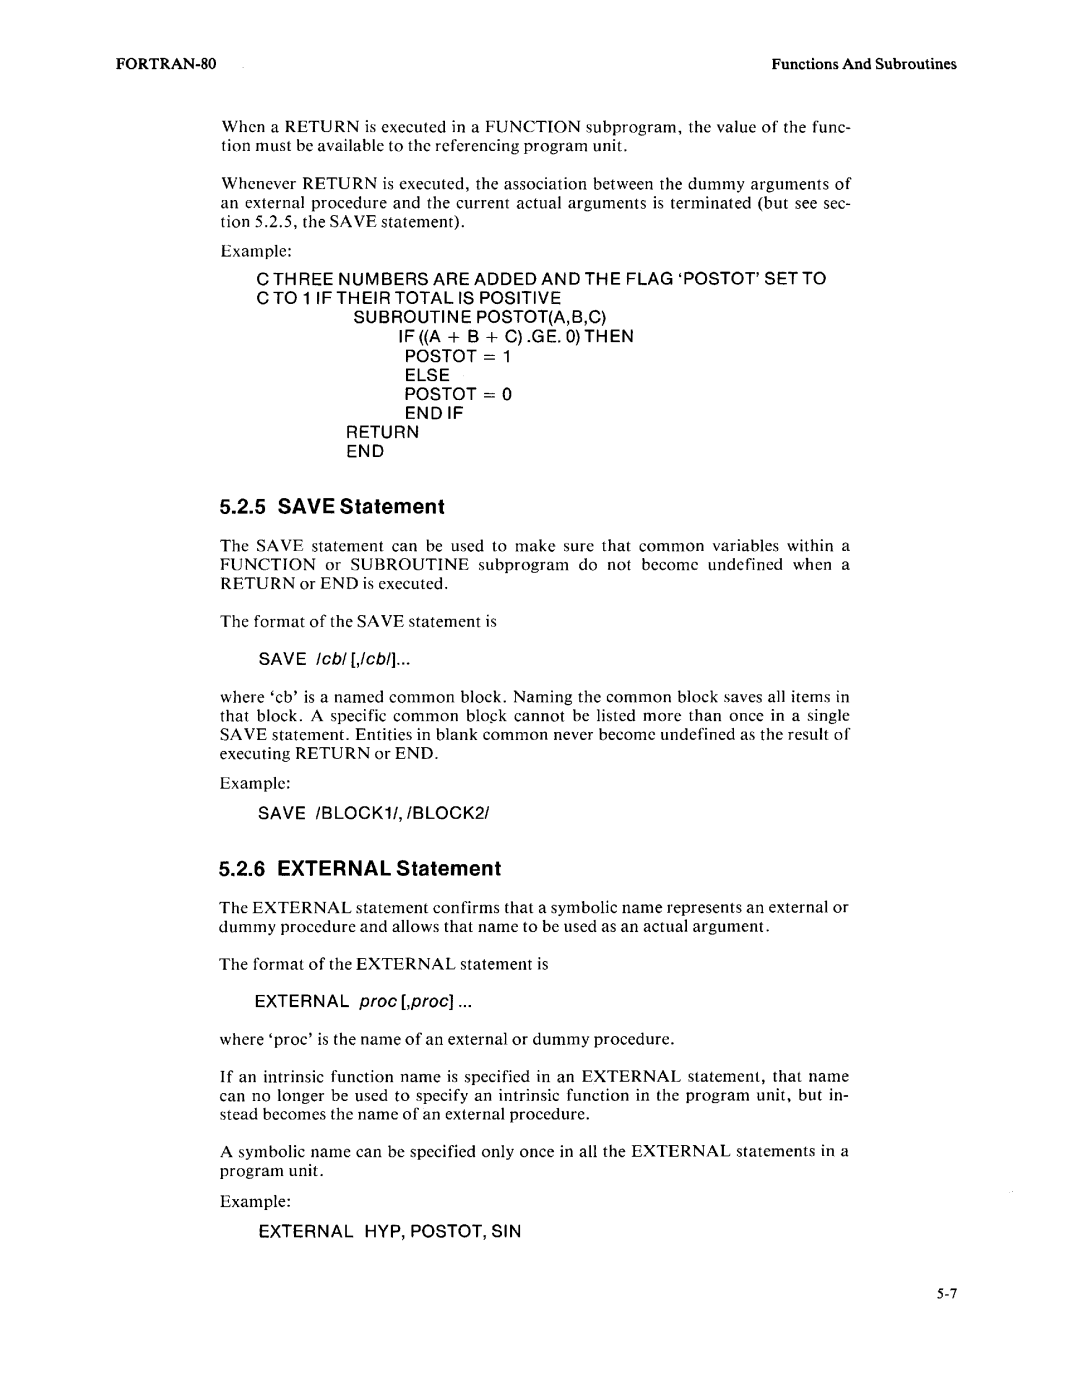 Intel fortran-80 manual 5.2.5SAVE Statement, 5.2.6EXTERNAL Statement, SAVE lebl ,Iebl, EXTERNAL proe ,proe 